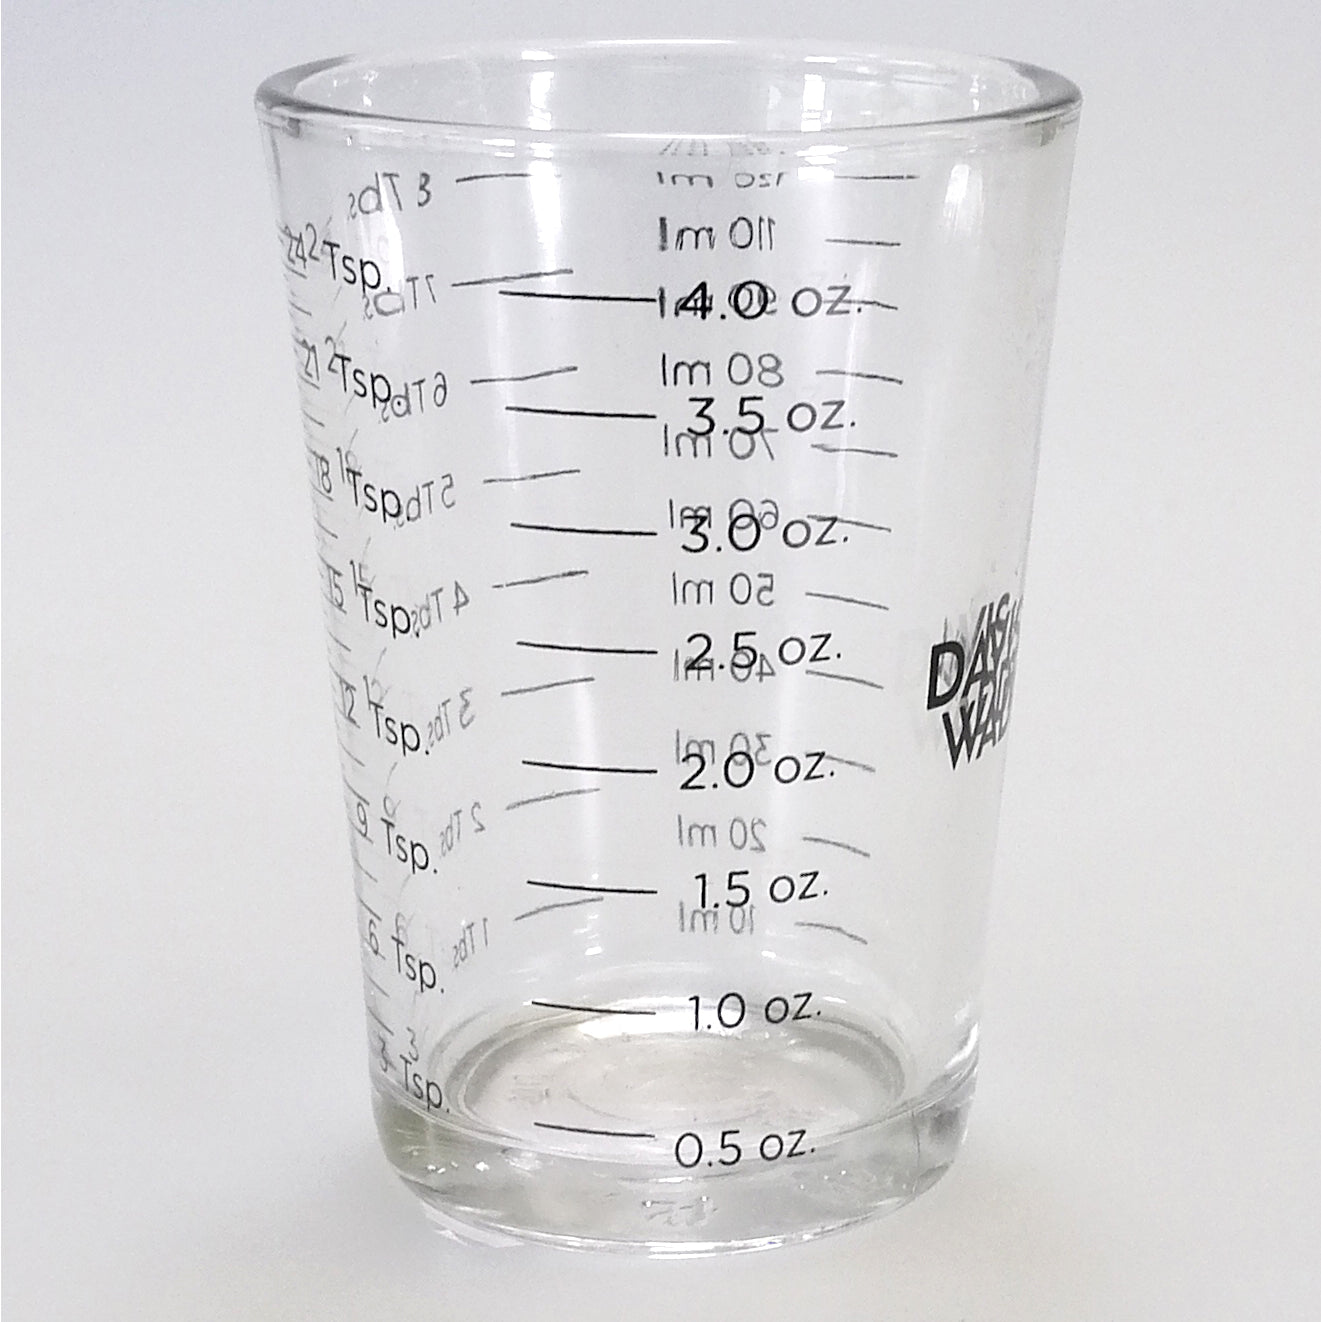 Davis & Waddell - Glass Measuring Cup